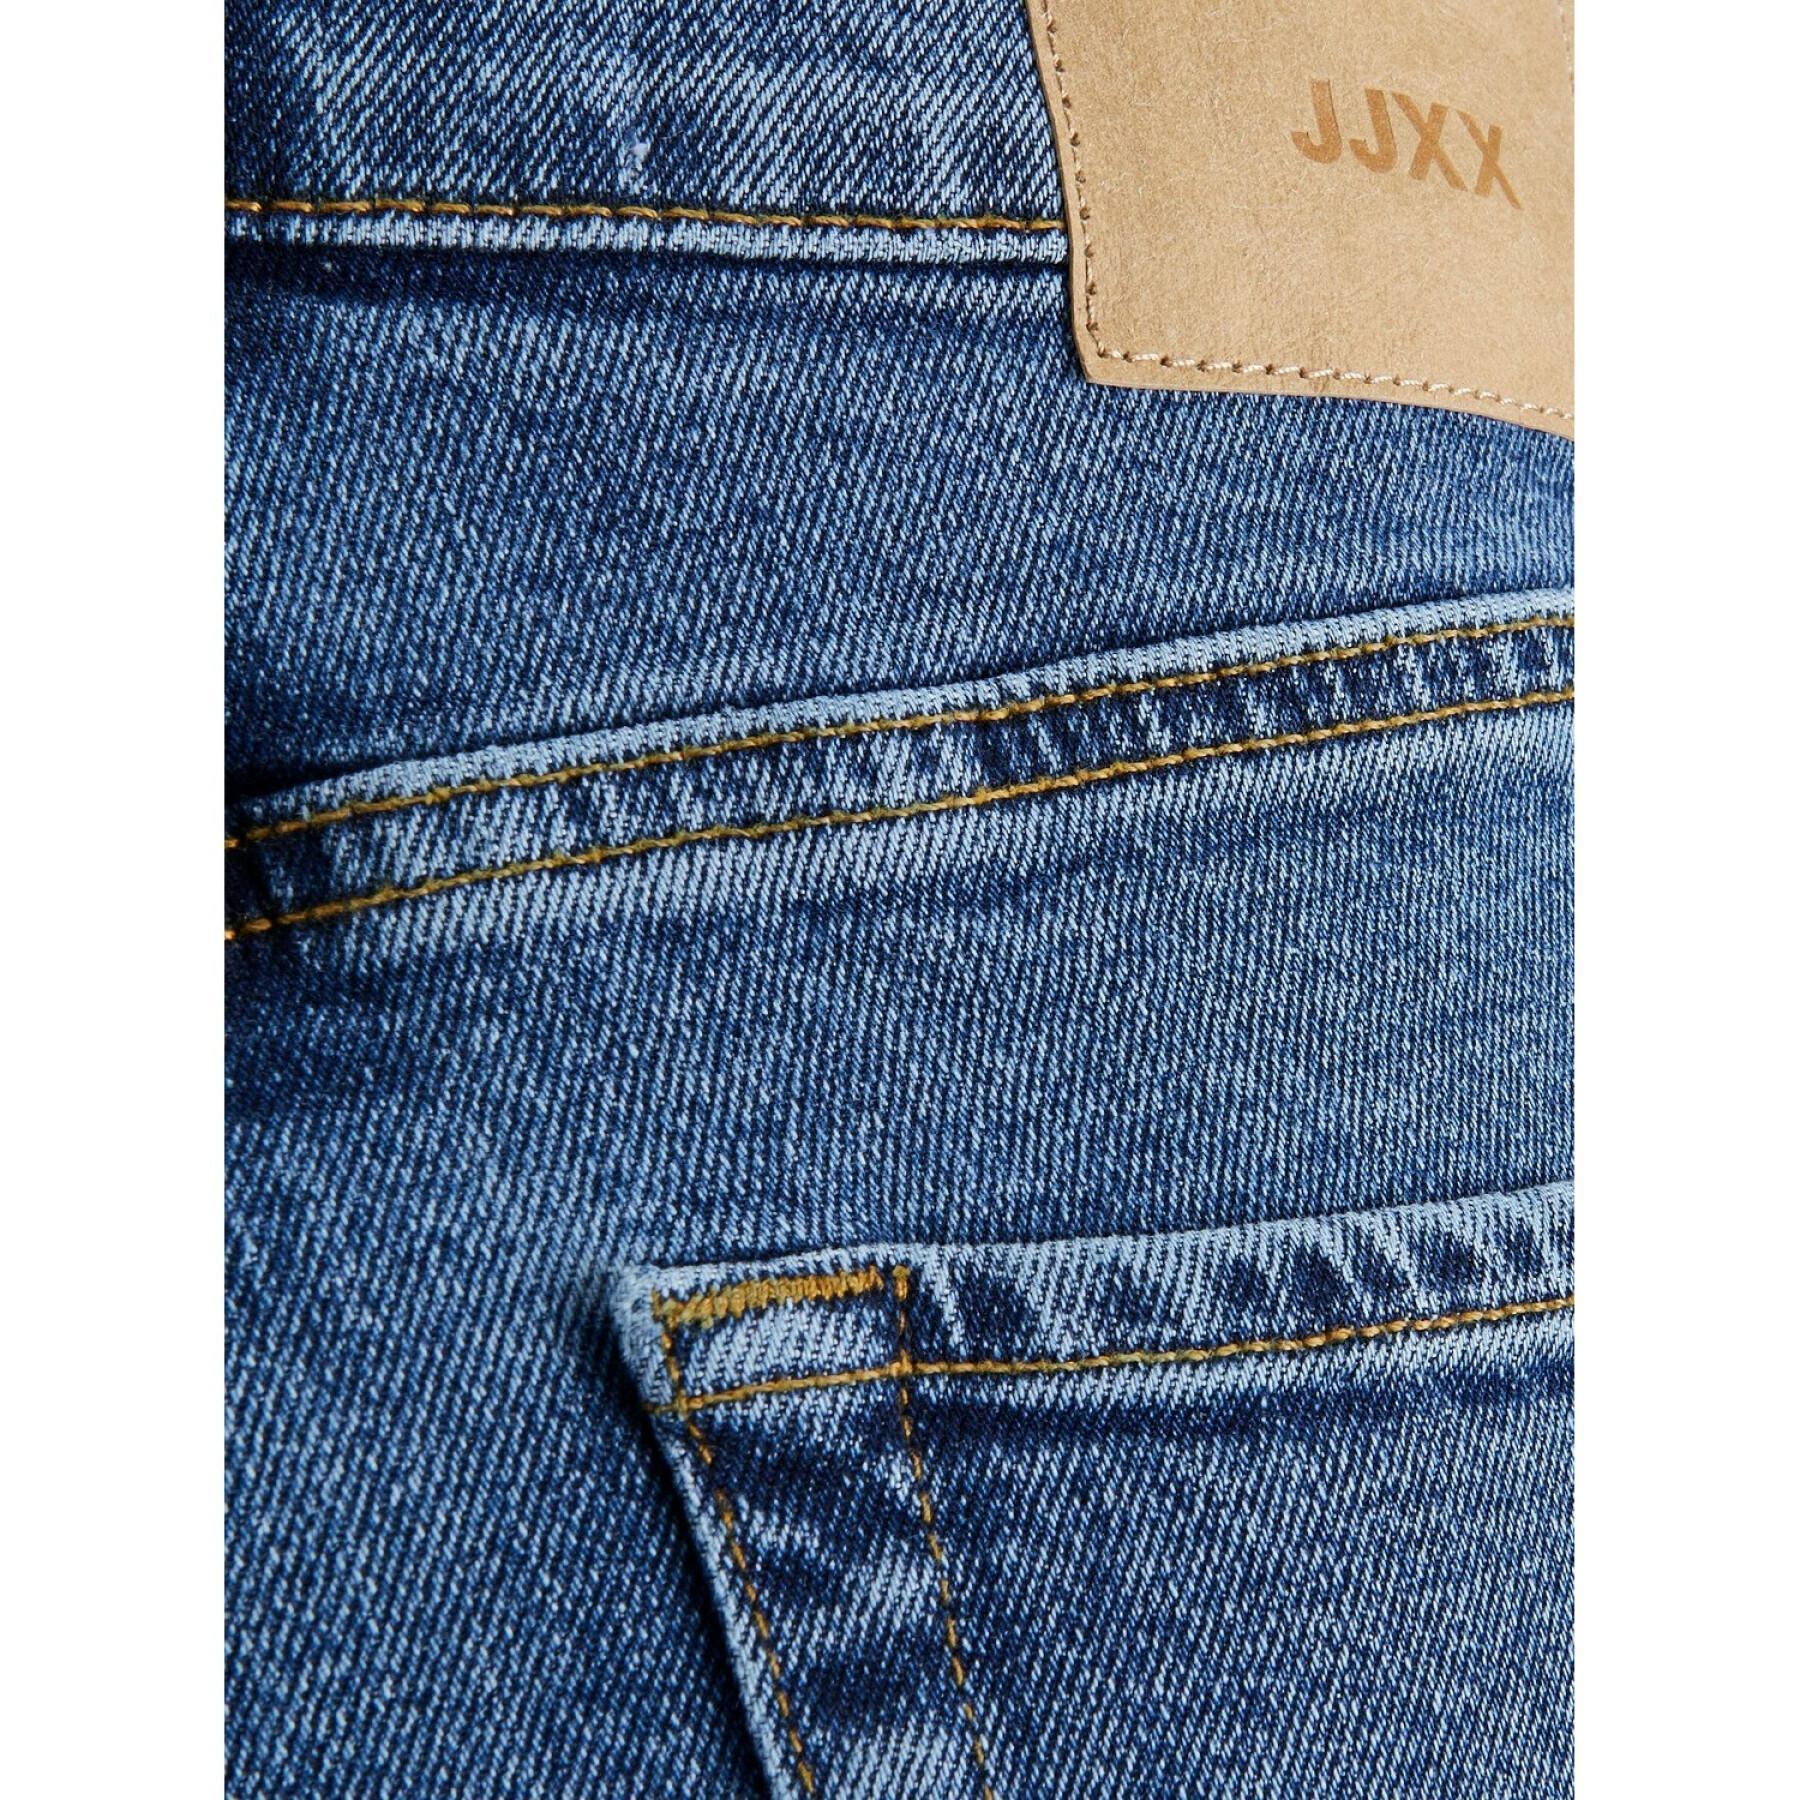 Women's straight jeans JJXX seoul cc3002